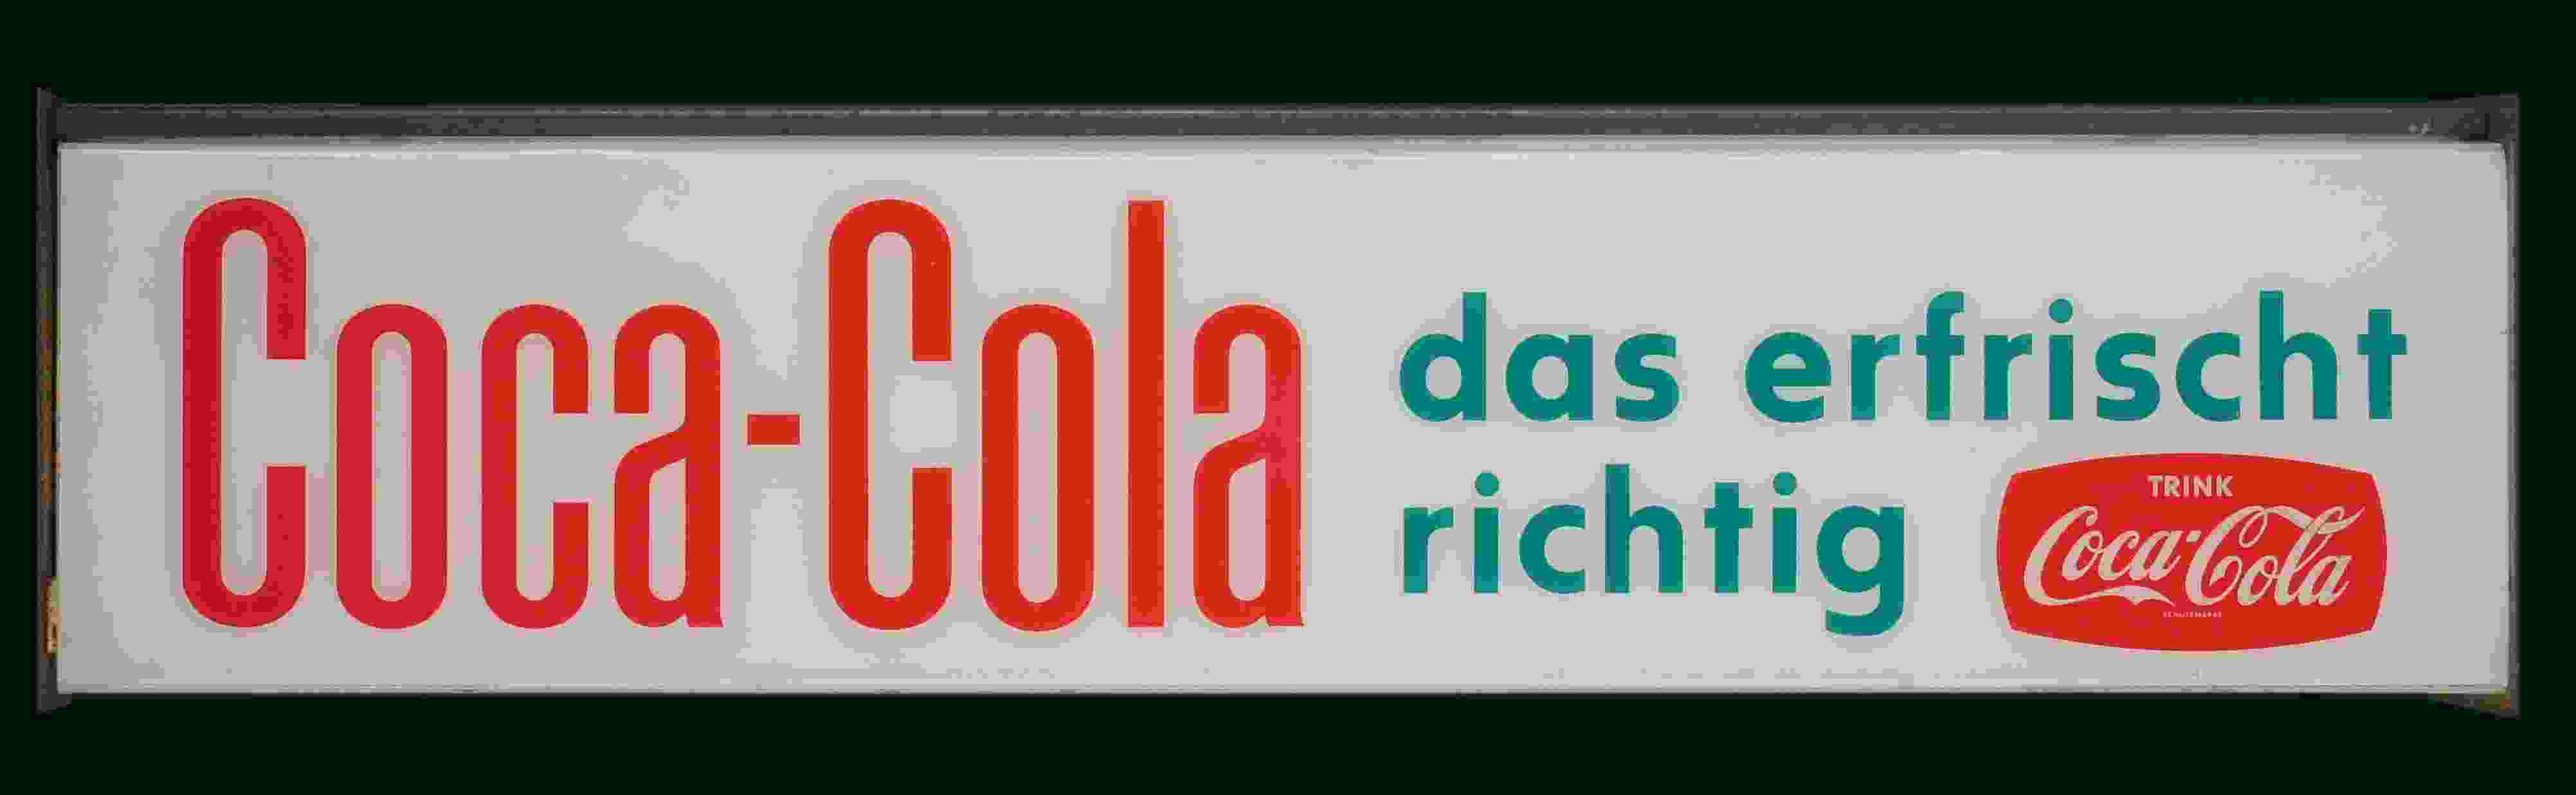 Coca-Cola Theken-Leuchte 